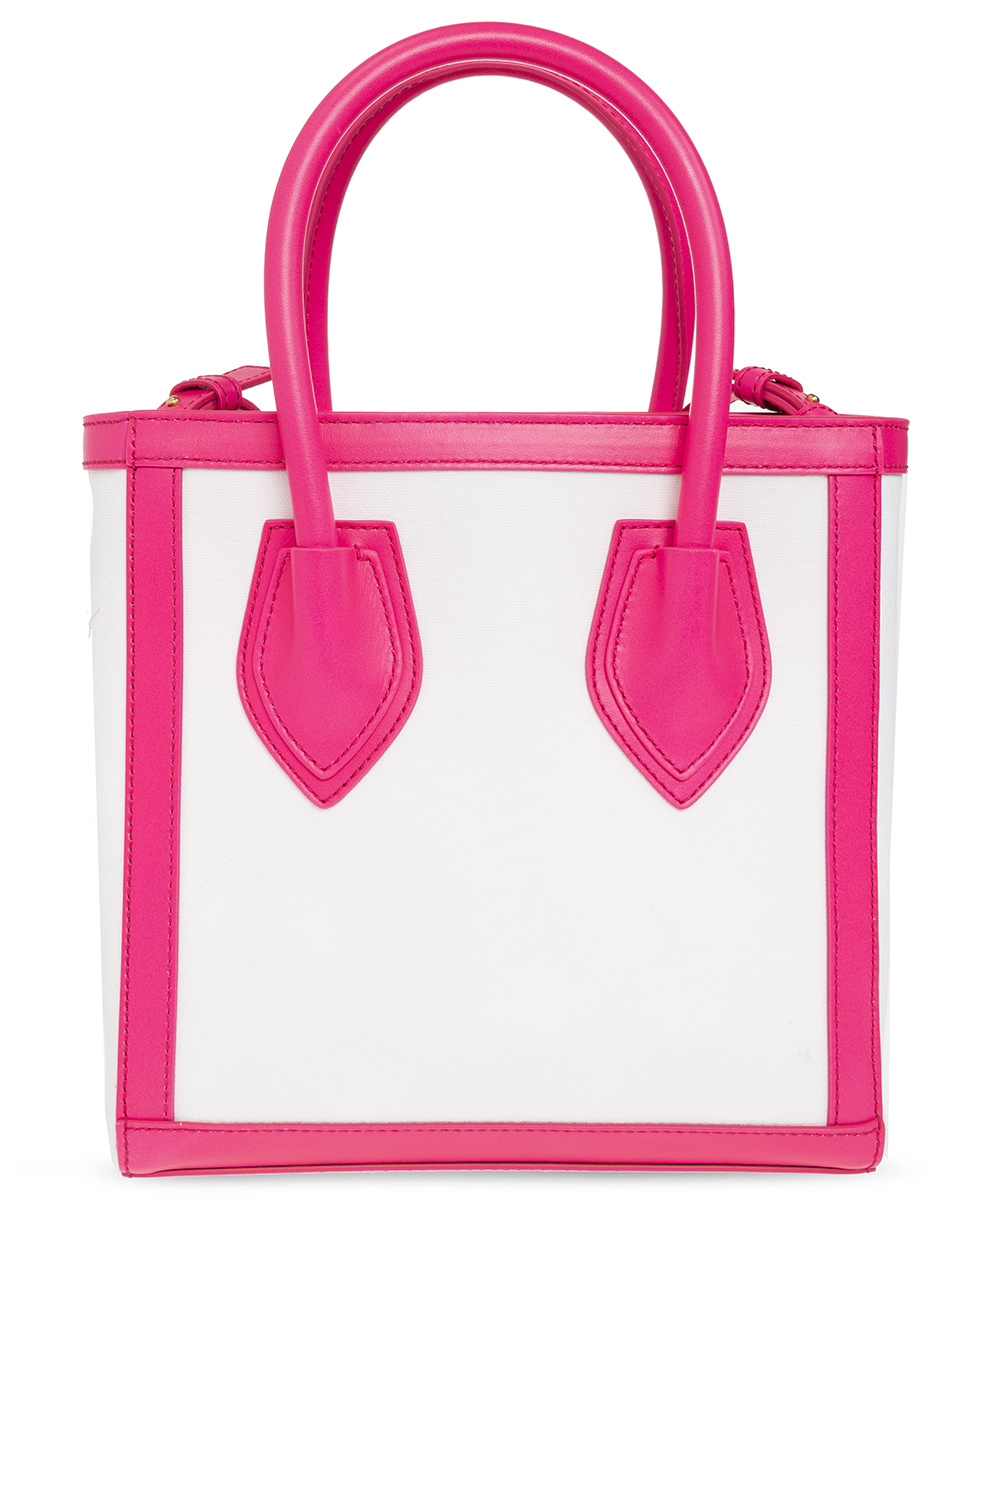 Balmain x Barbie Monogram Shopping Tote Bag